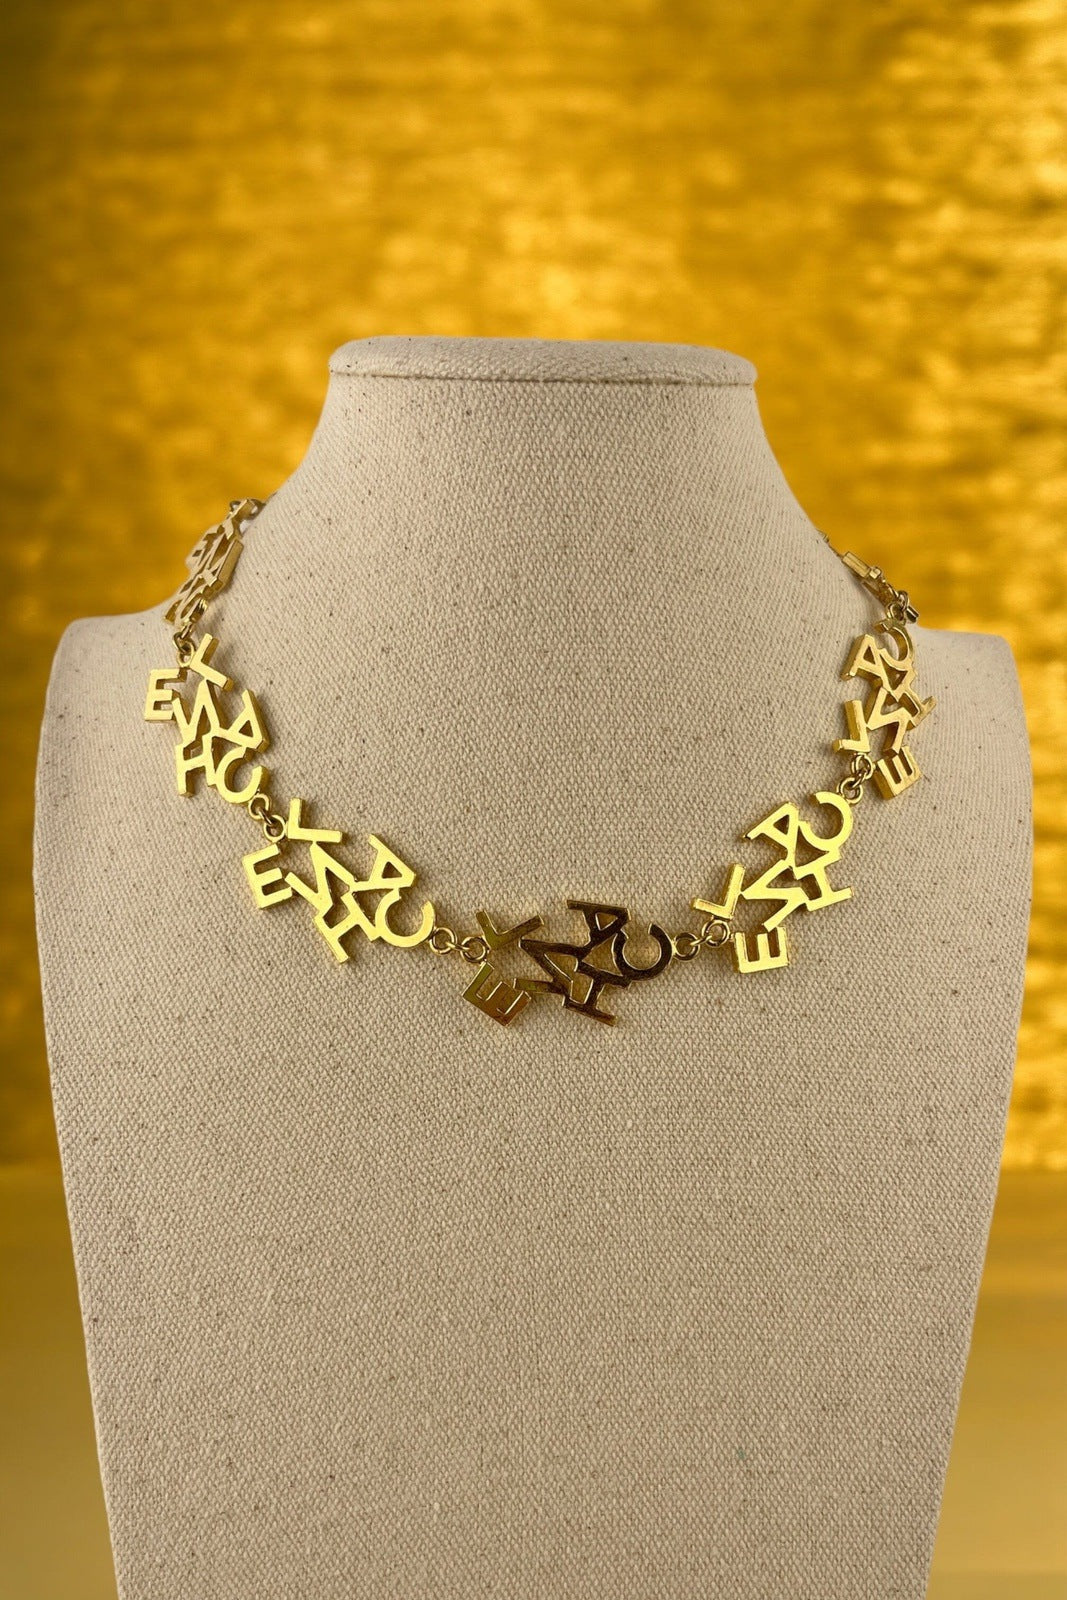 Repurposed Louis Vuitton Clasp Necklace – Reluxe Vintage